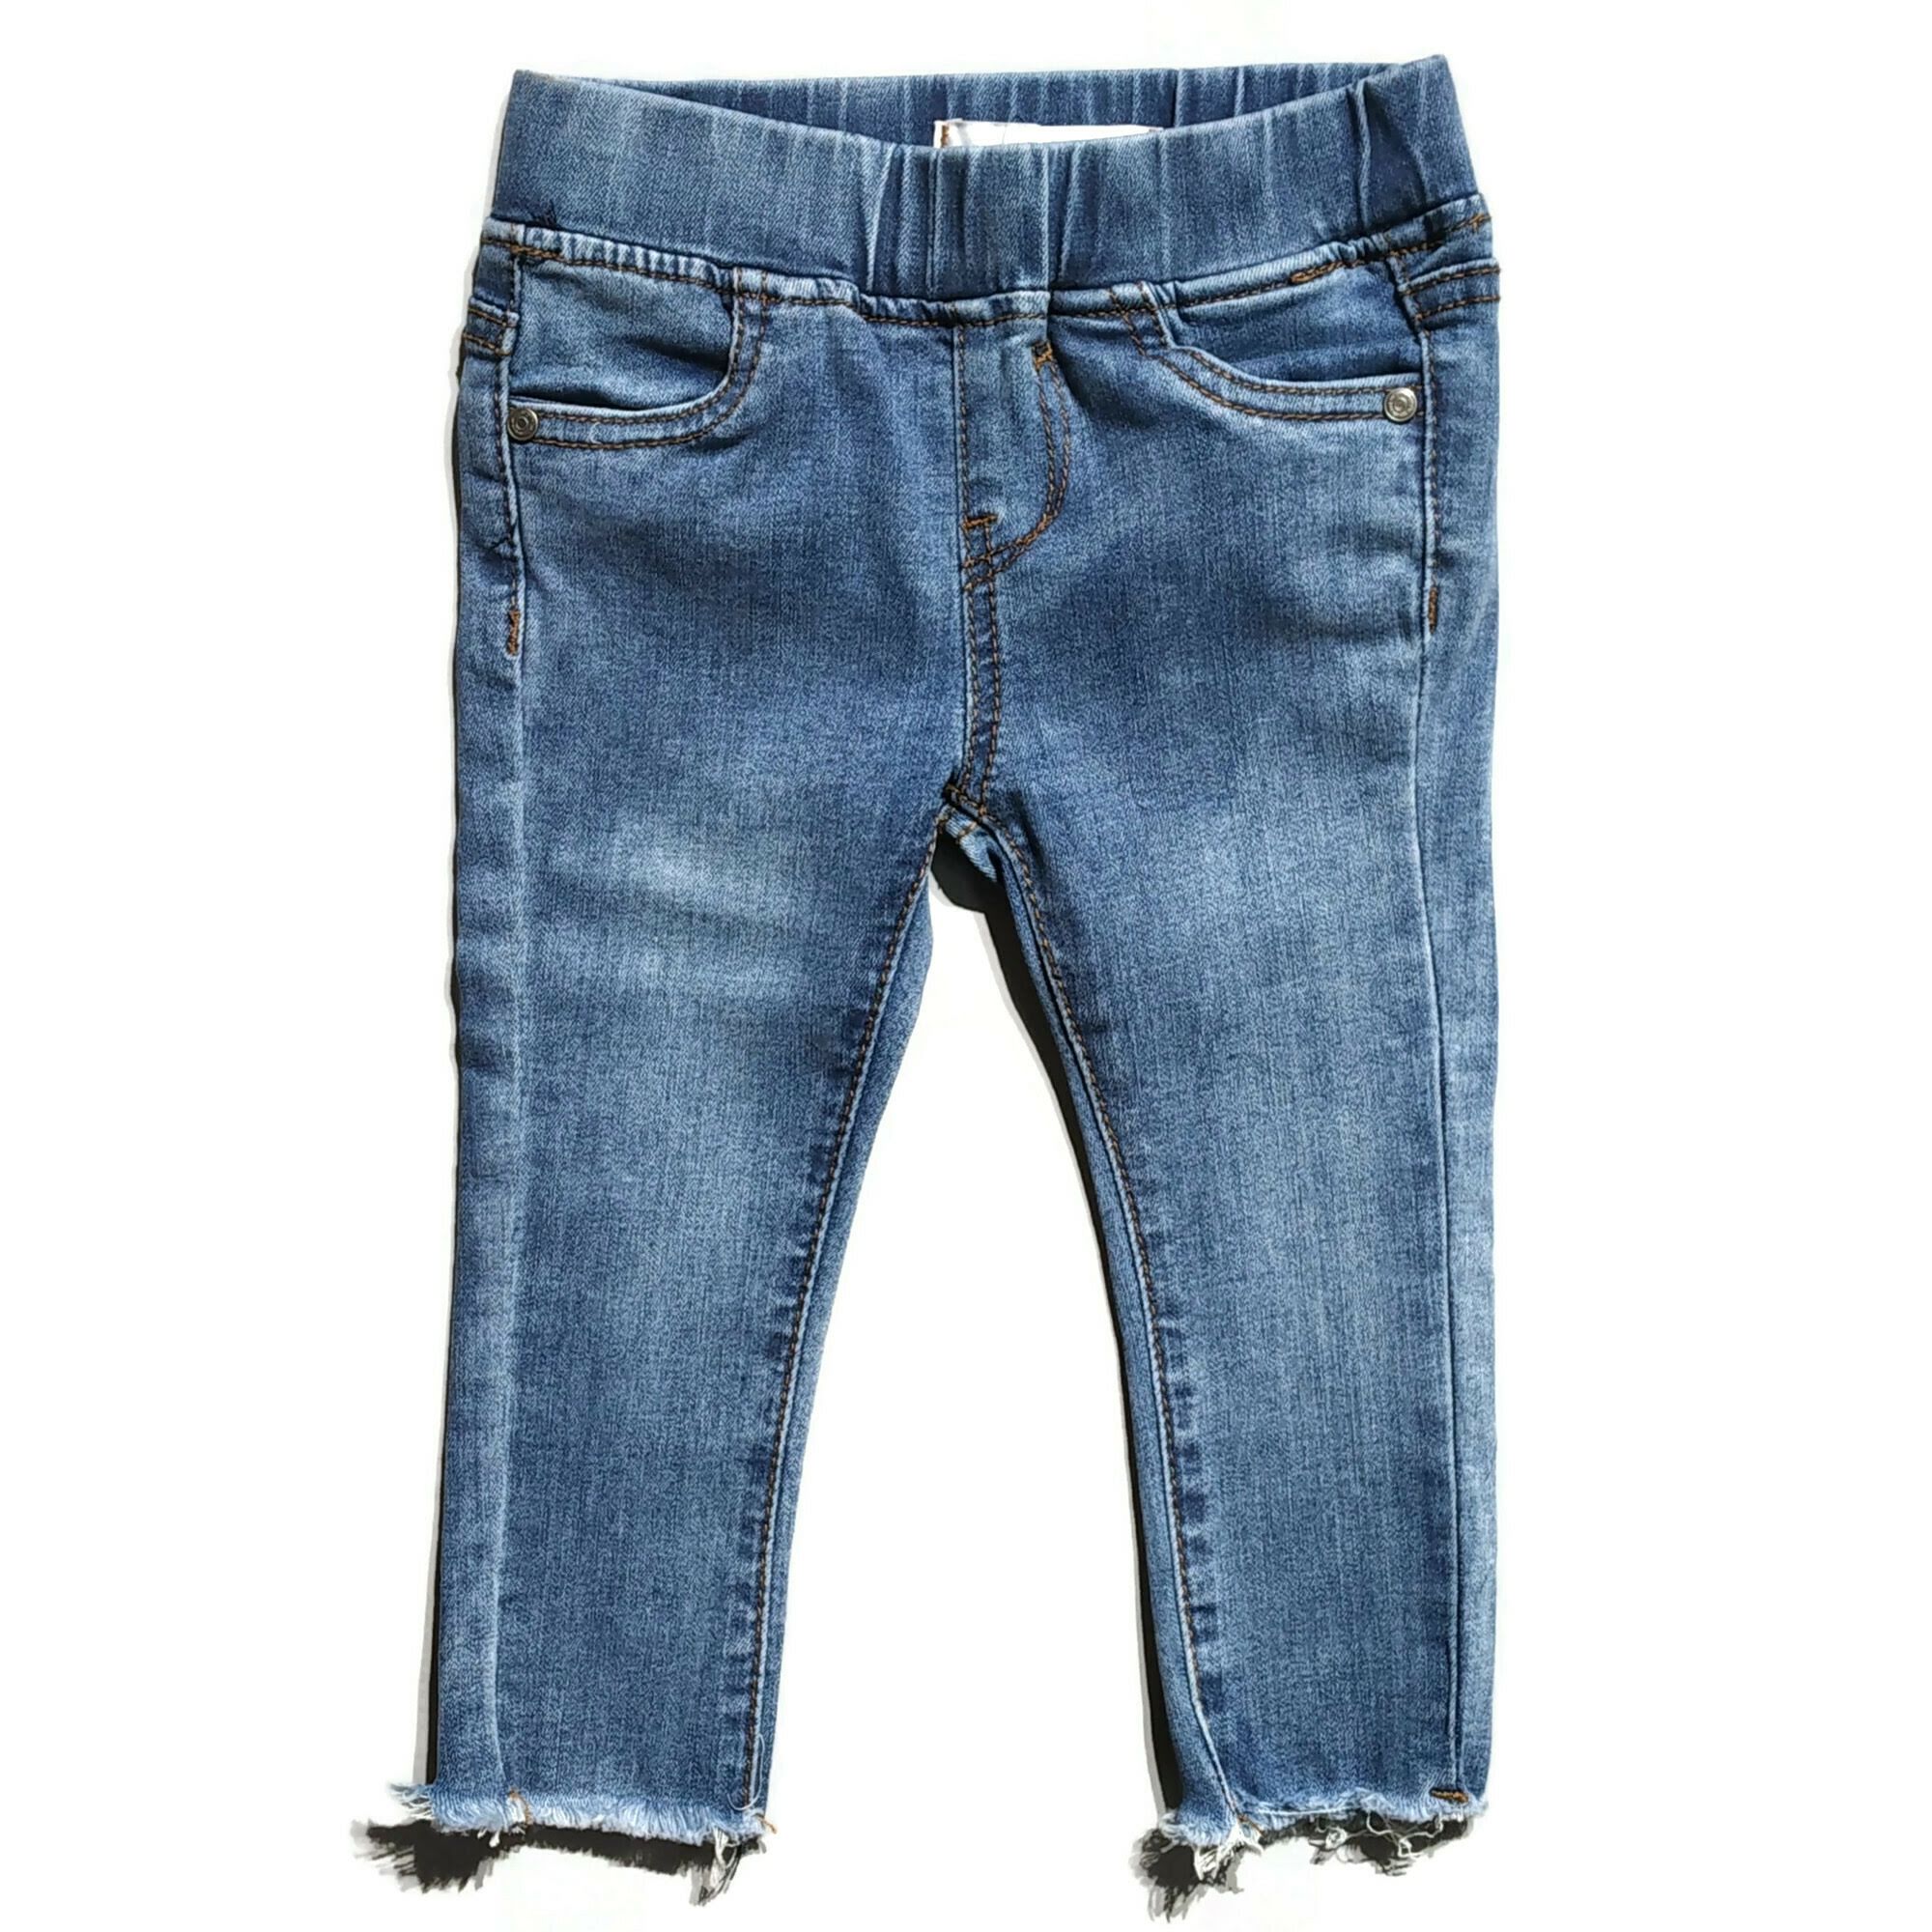 High Waist Ripped Jeans Girls Teen Fashion Denim Pants - Chubibi-nextbuild.com.vn